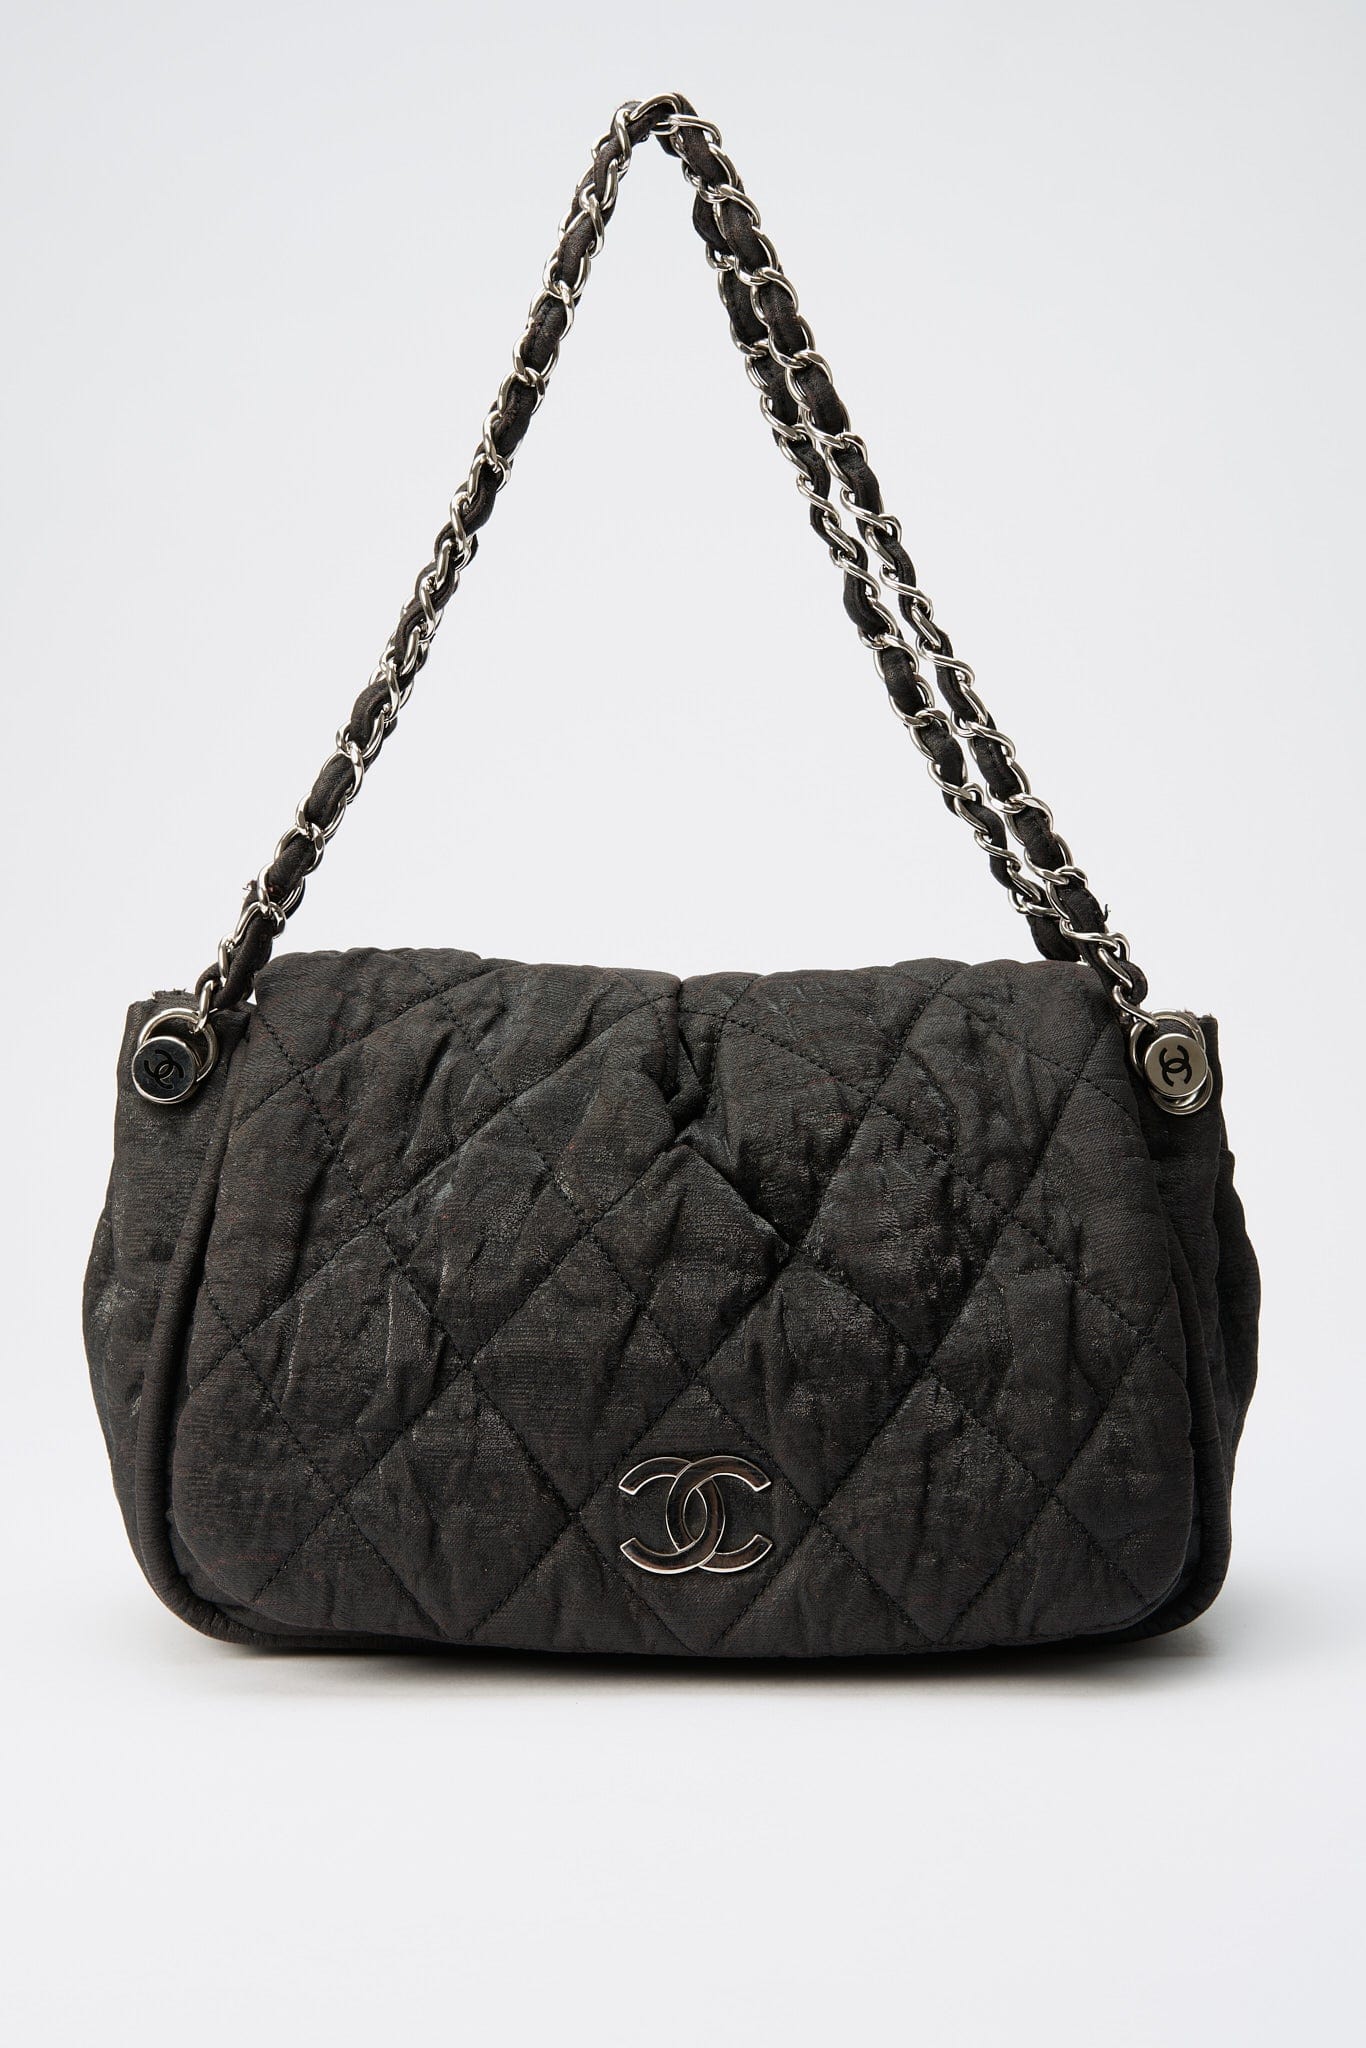 CHANEL, Bags, Brand New Chanel Precision Bag Very Rare Black Bag With  Black Logo